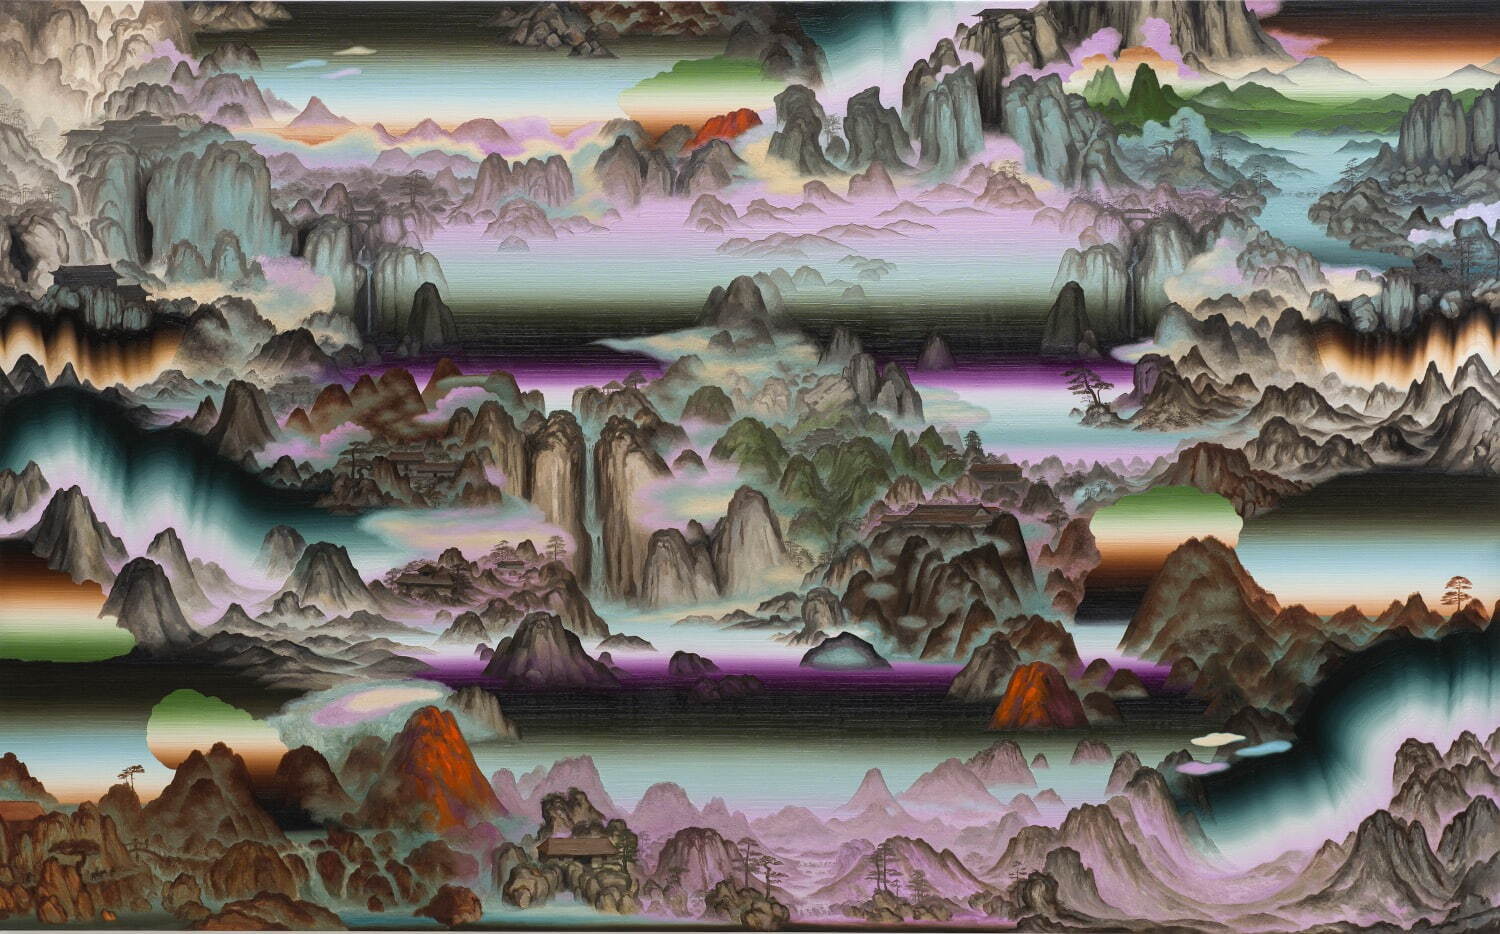 Christian Hidaka, <i width="1500" height="934">Gathering Peaks</i>, 2019
Oil on linen, 206×325cm
Courtesy of the artist and Galerie Michel Rein